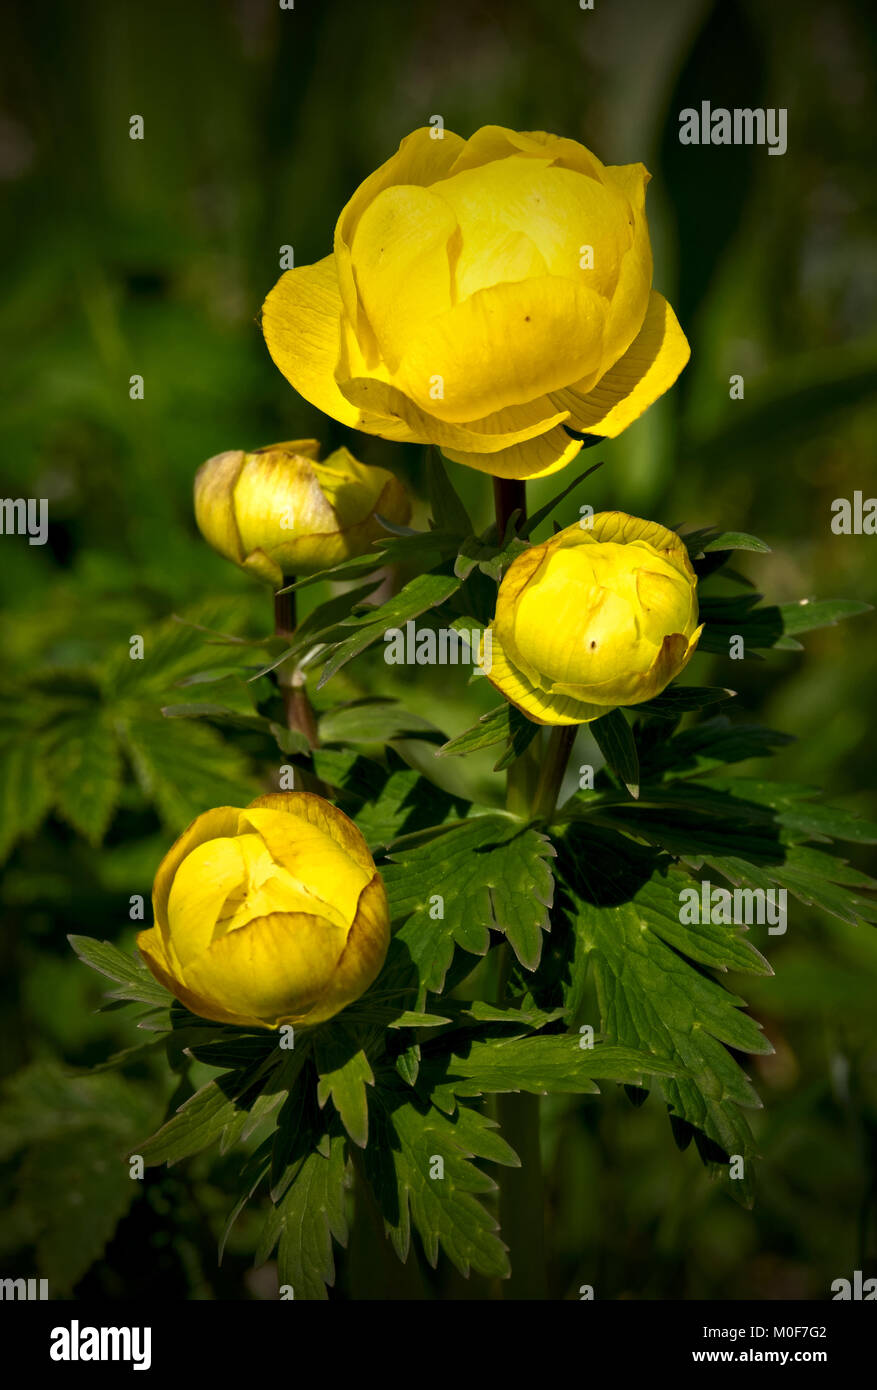 Trollius flower close-up Stock Photo